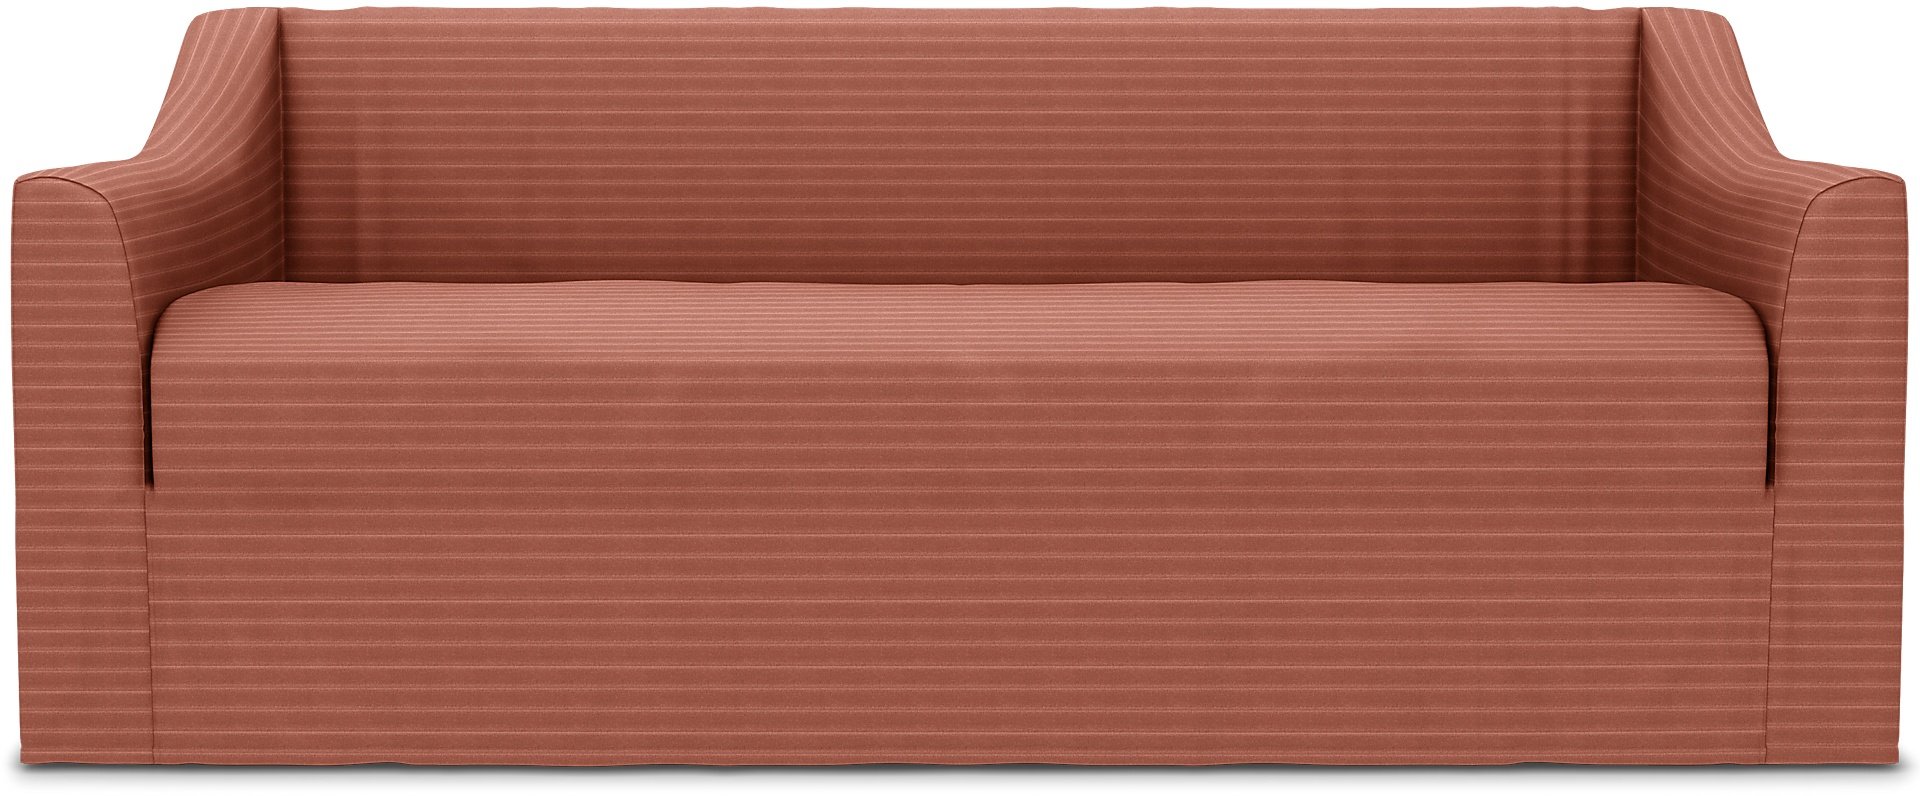 Farlov 2 Seater Sofa Cover, Retro Pink, Corduroy - Bemz